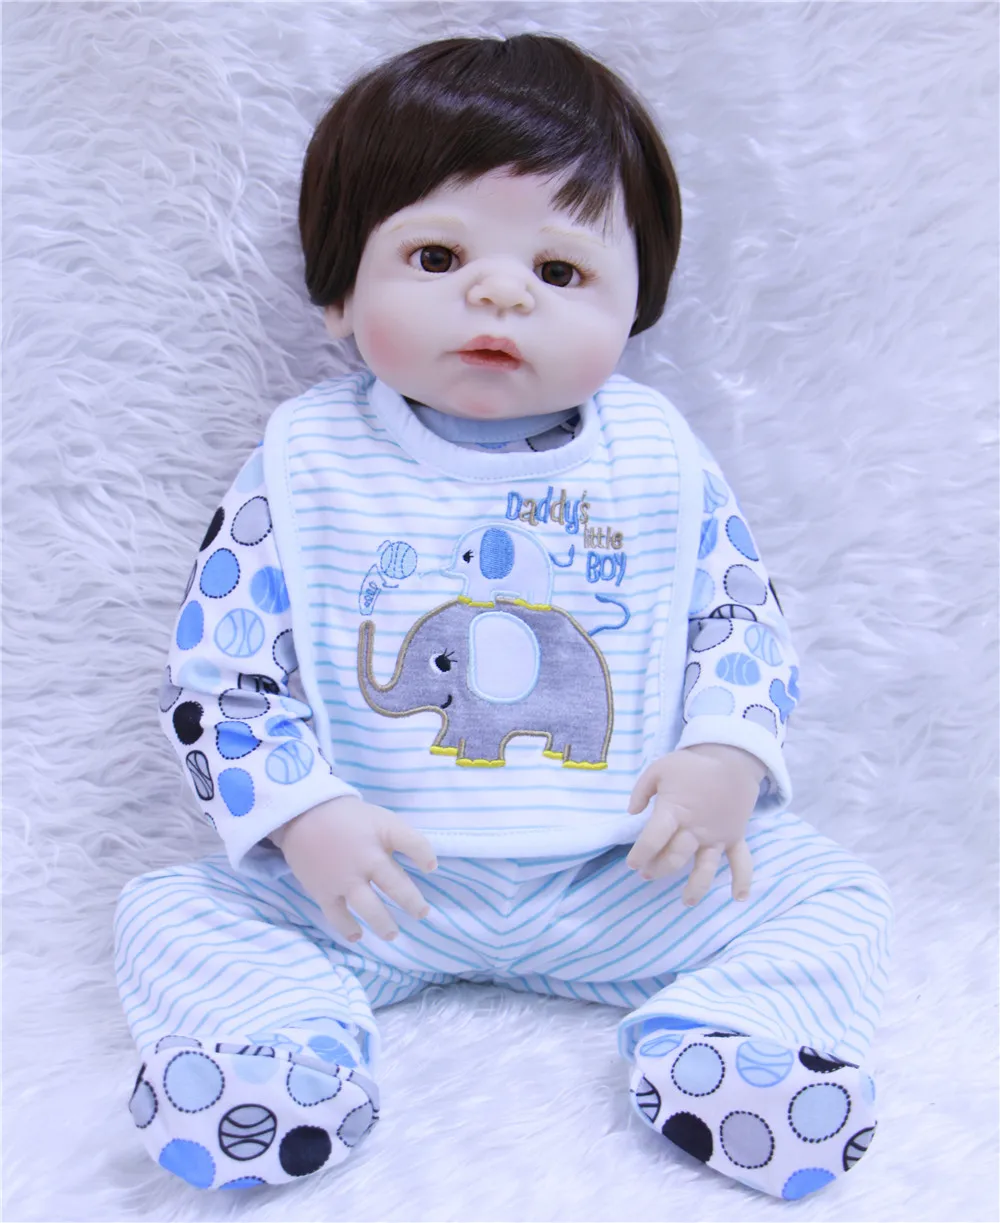 boy Reborn brinquedos Handmade Reborn Dolls 55 CM Realistic Soft Silicone Vinyl Baby Dolls For Kid's Birthday Gift _ - AliExpress Mobile